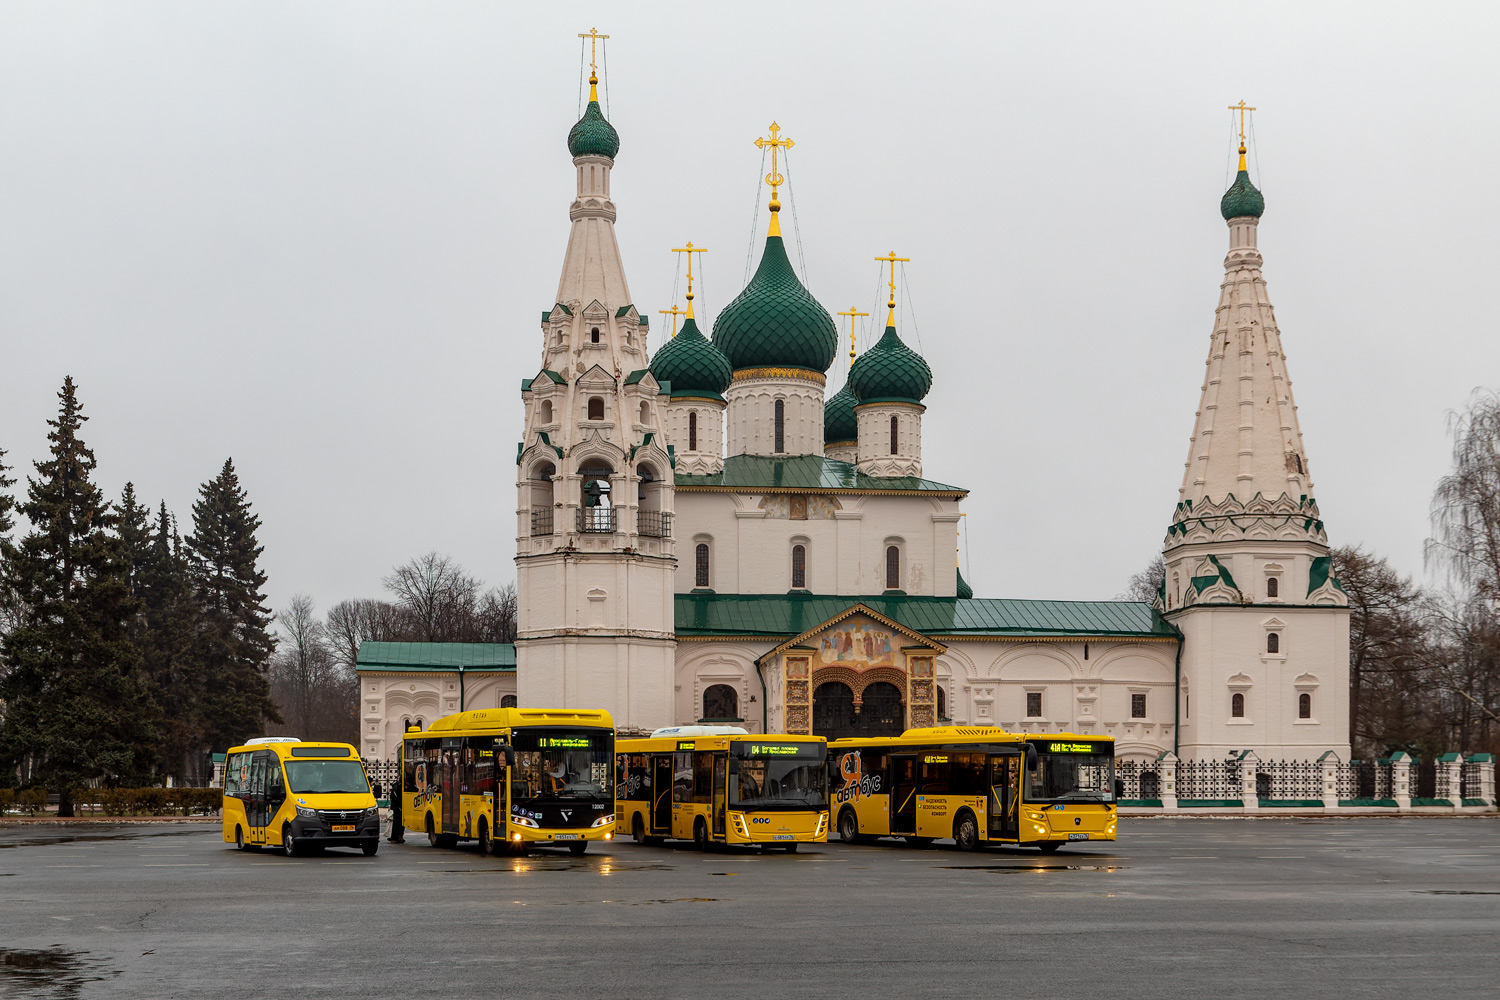 Yaroslavl region — New buses